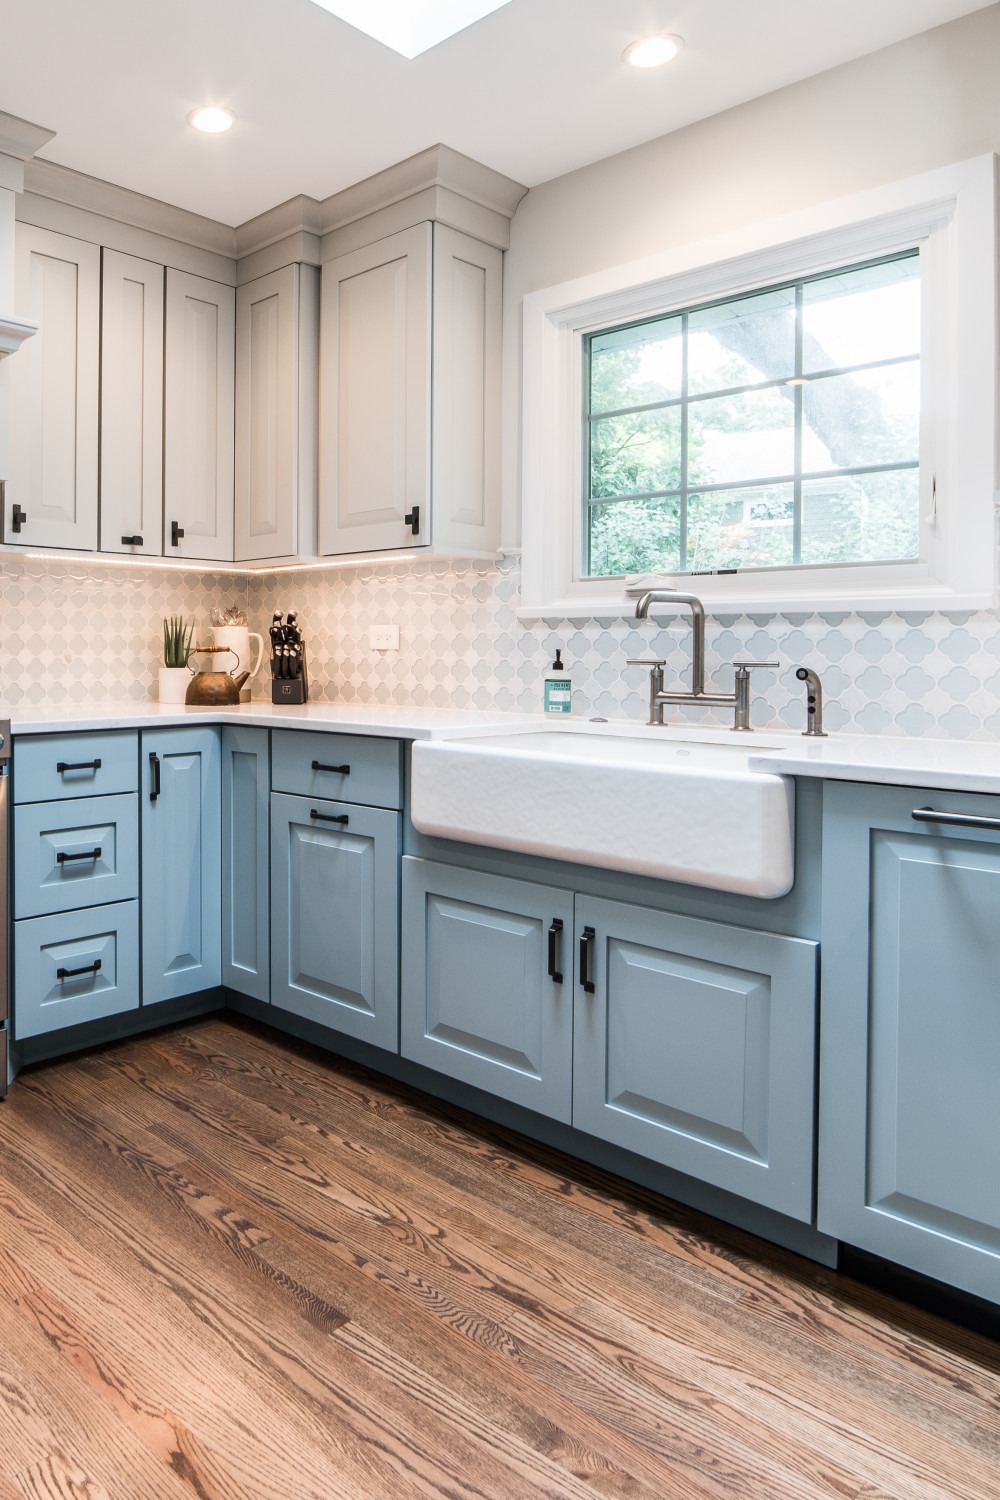 Gray Wall Blue Base Cabinets Farmhouse Sink Glass Backsplash Tiles White Countertops Dark Wood Floor